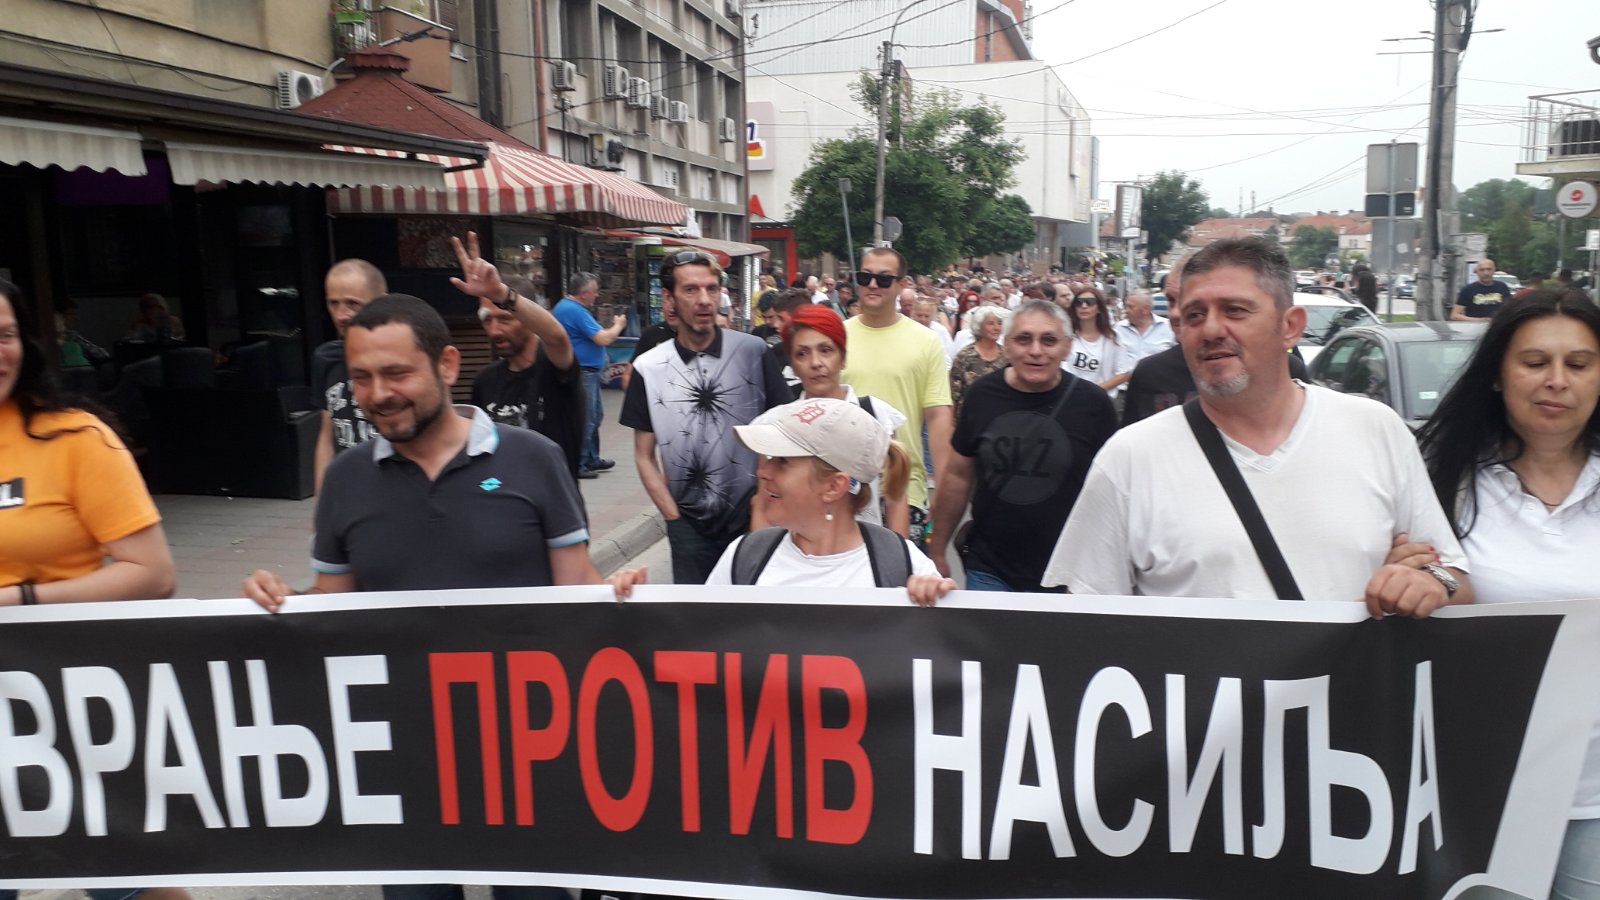 Protest "Srbija protiv nasilja" u preko 10 gradova obeležile šetnje, blokade puteva i zahtevi za ostavkama (FOTO, VIDEO) 60